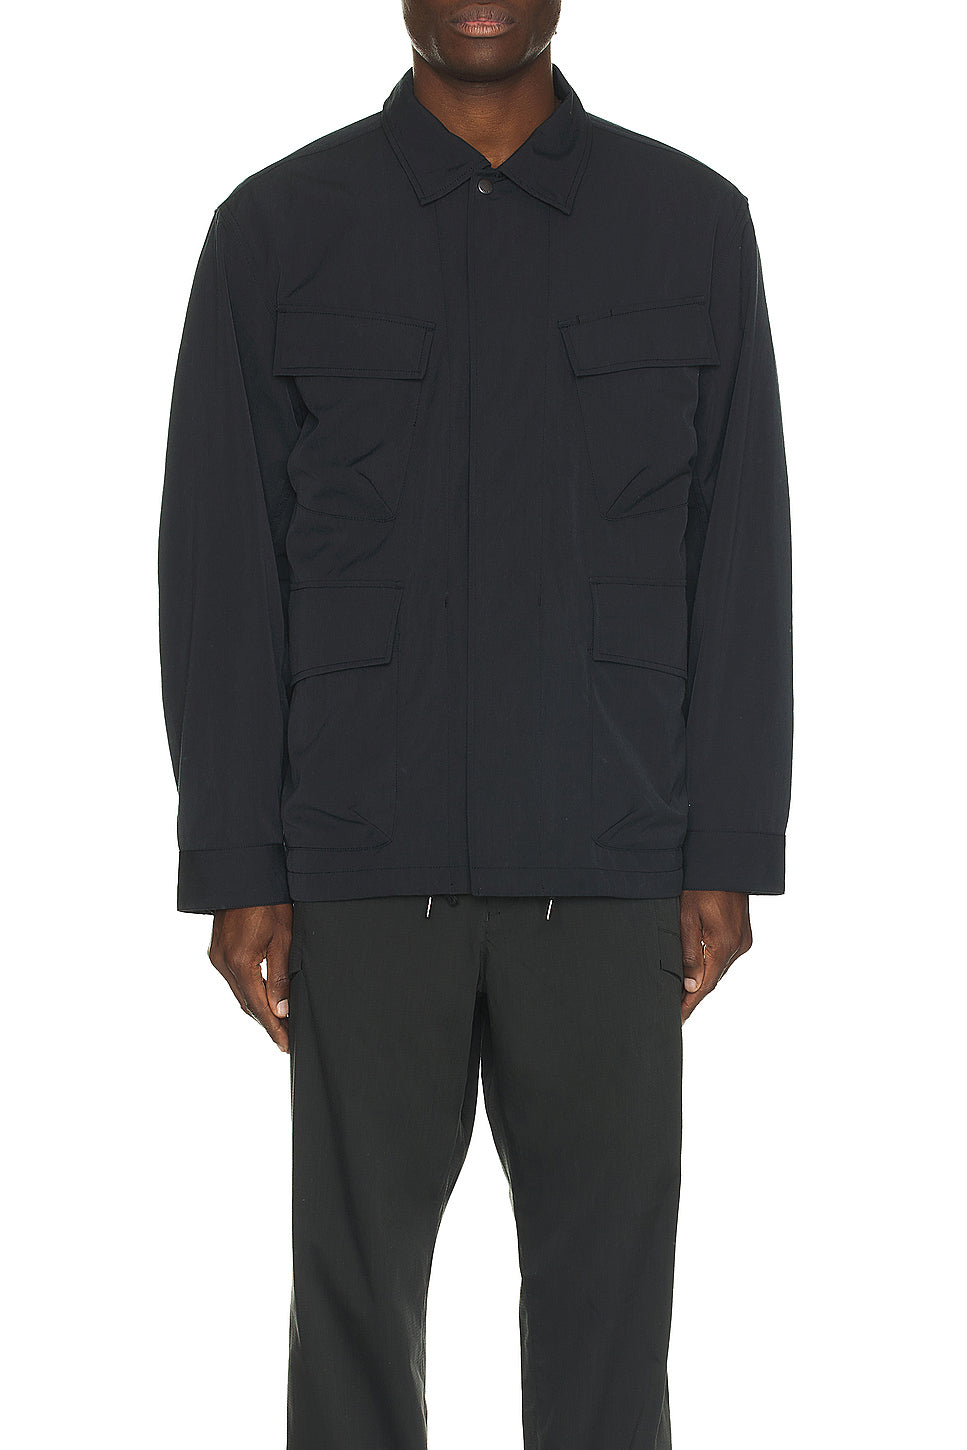 Takibi Weather Cloth Jacket